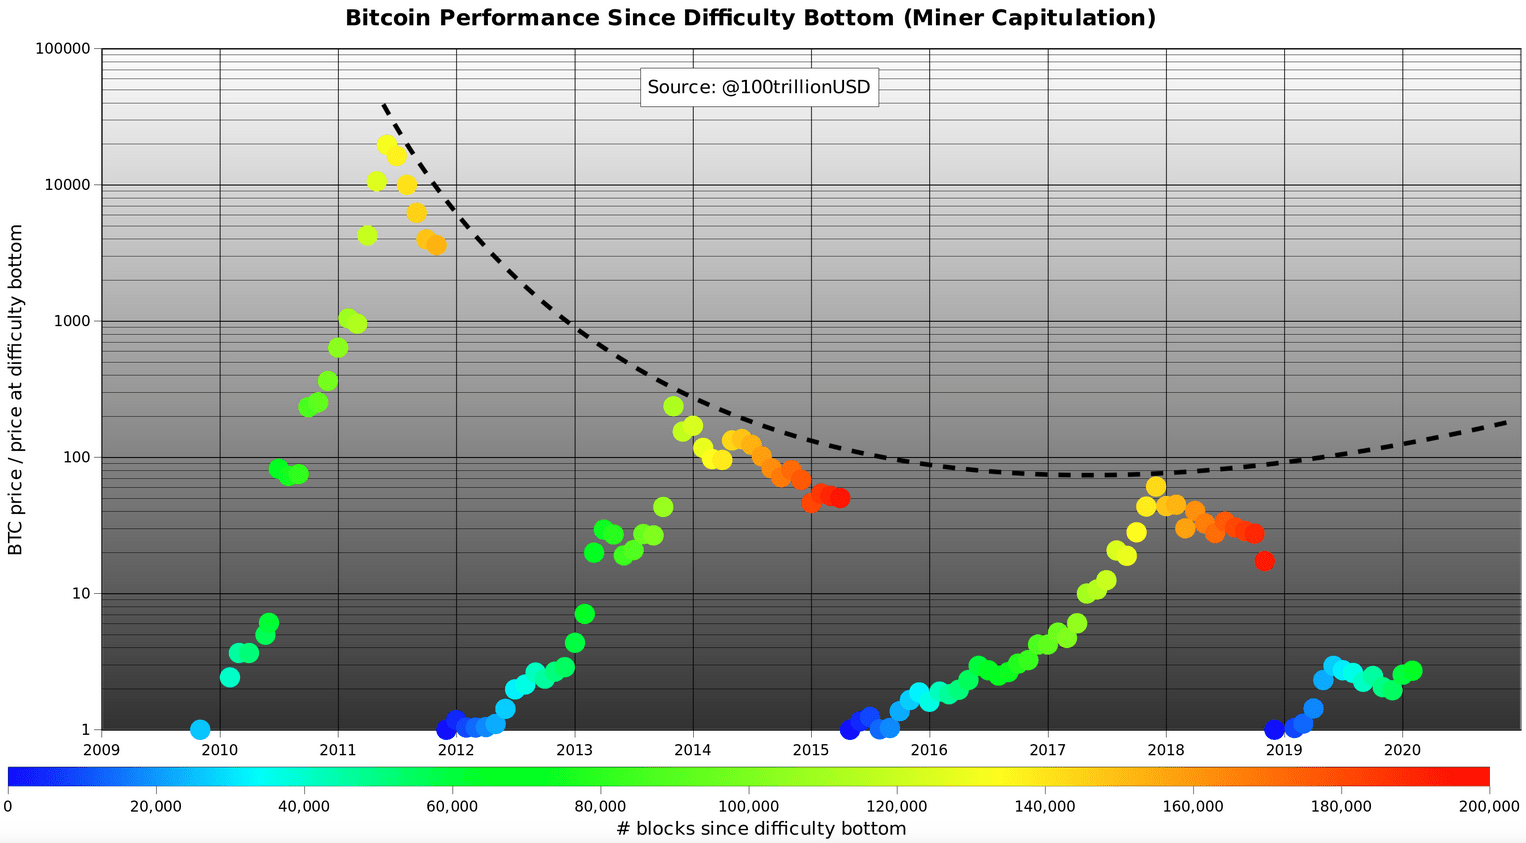 Bitcoin price prediction model